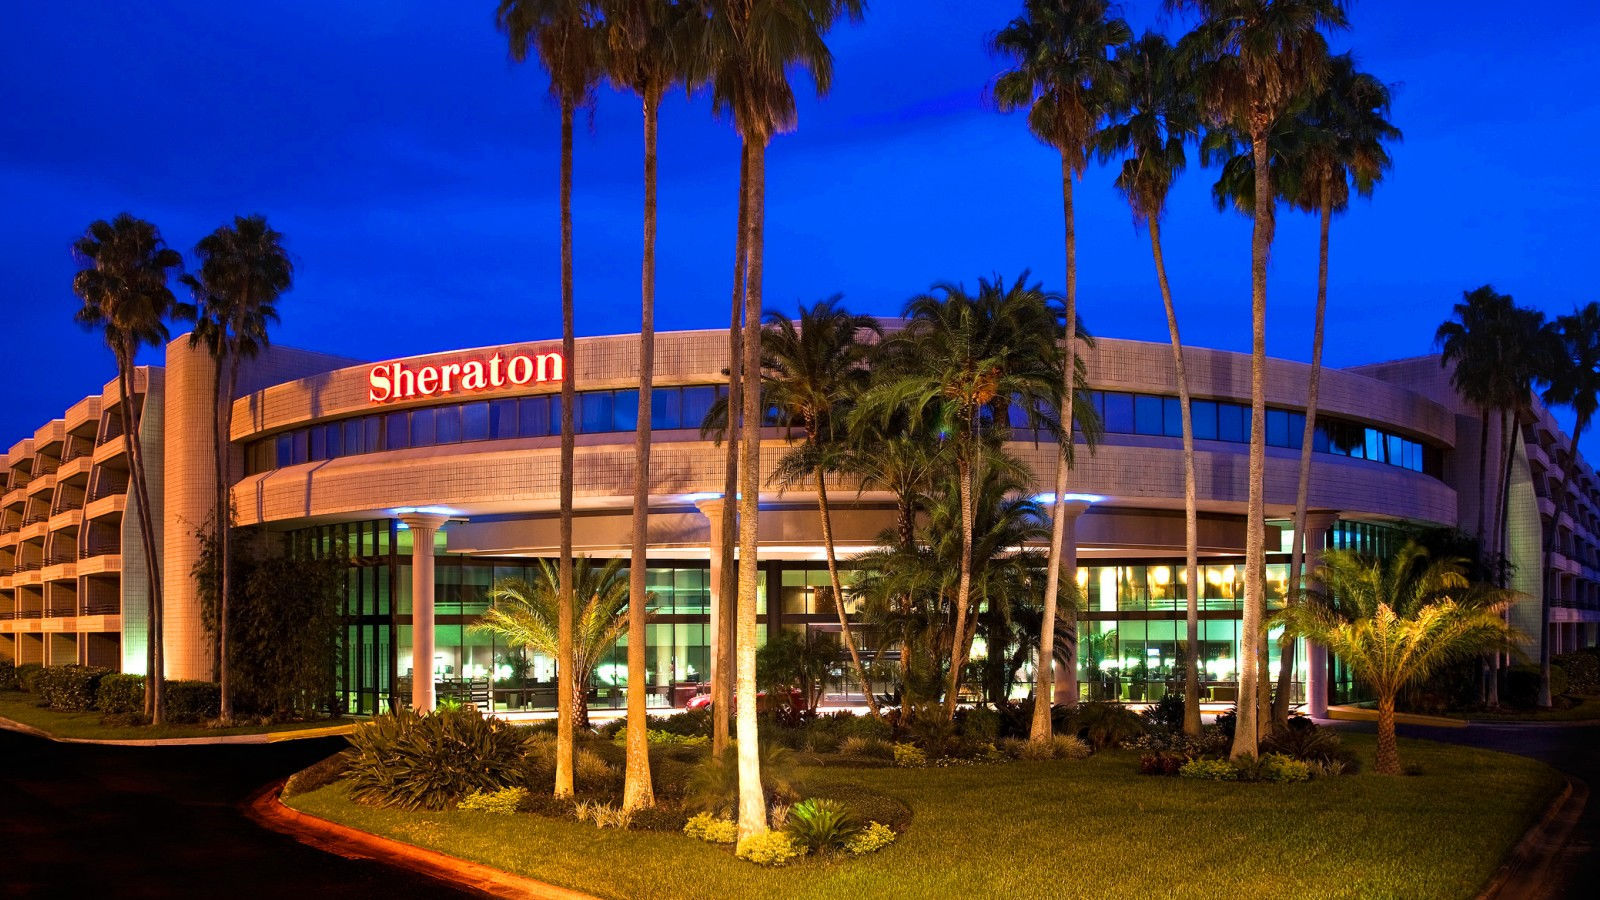 Photo of Sheraton Tampa Brandon Hotel, Tampa, FL